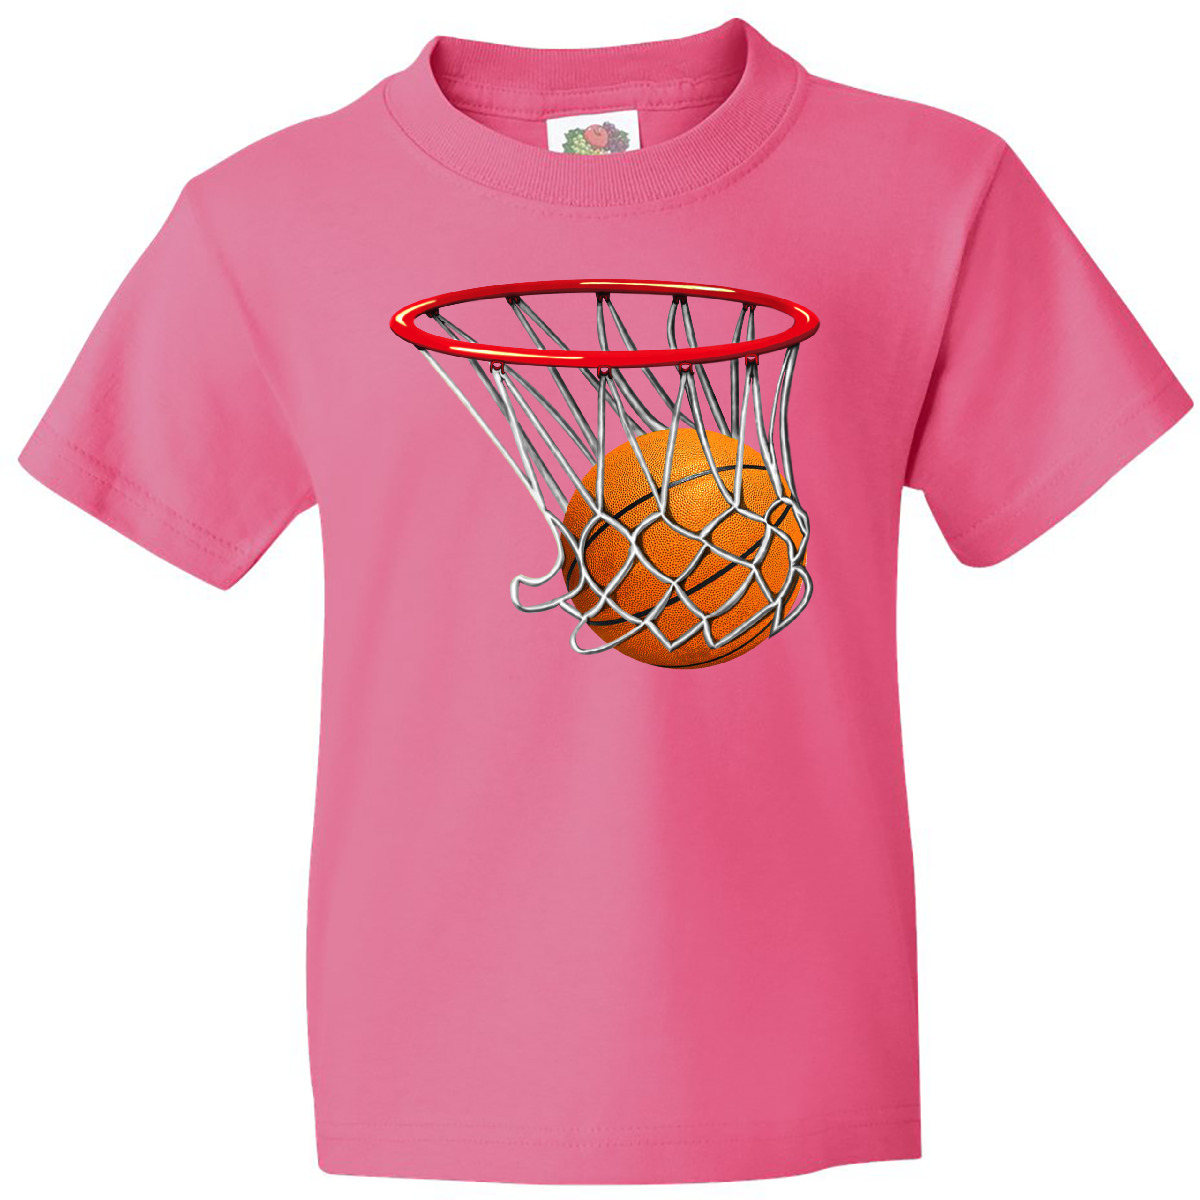 Baller | Bball Hoops Sports Basketball Youth Hoop T-Shirt Swish eBay Shoot Inktastic